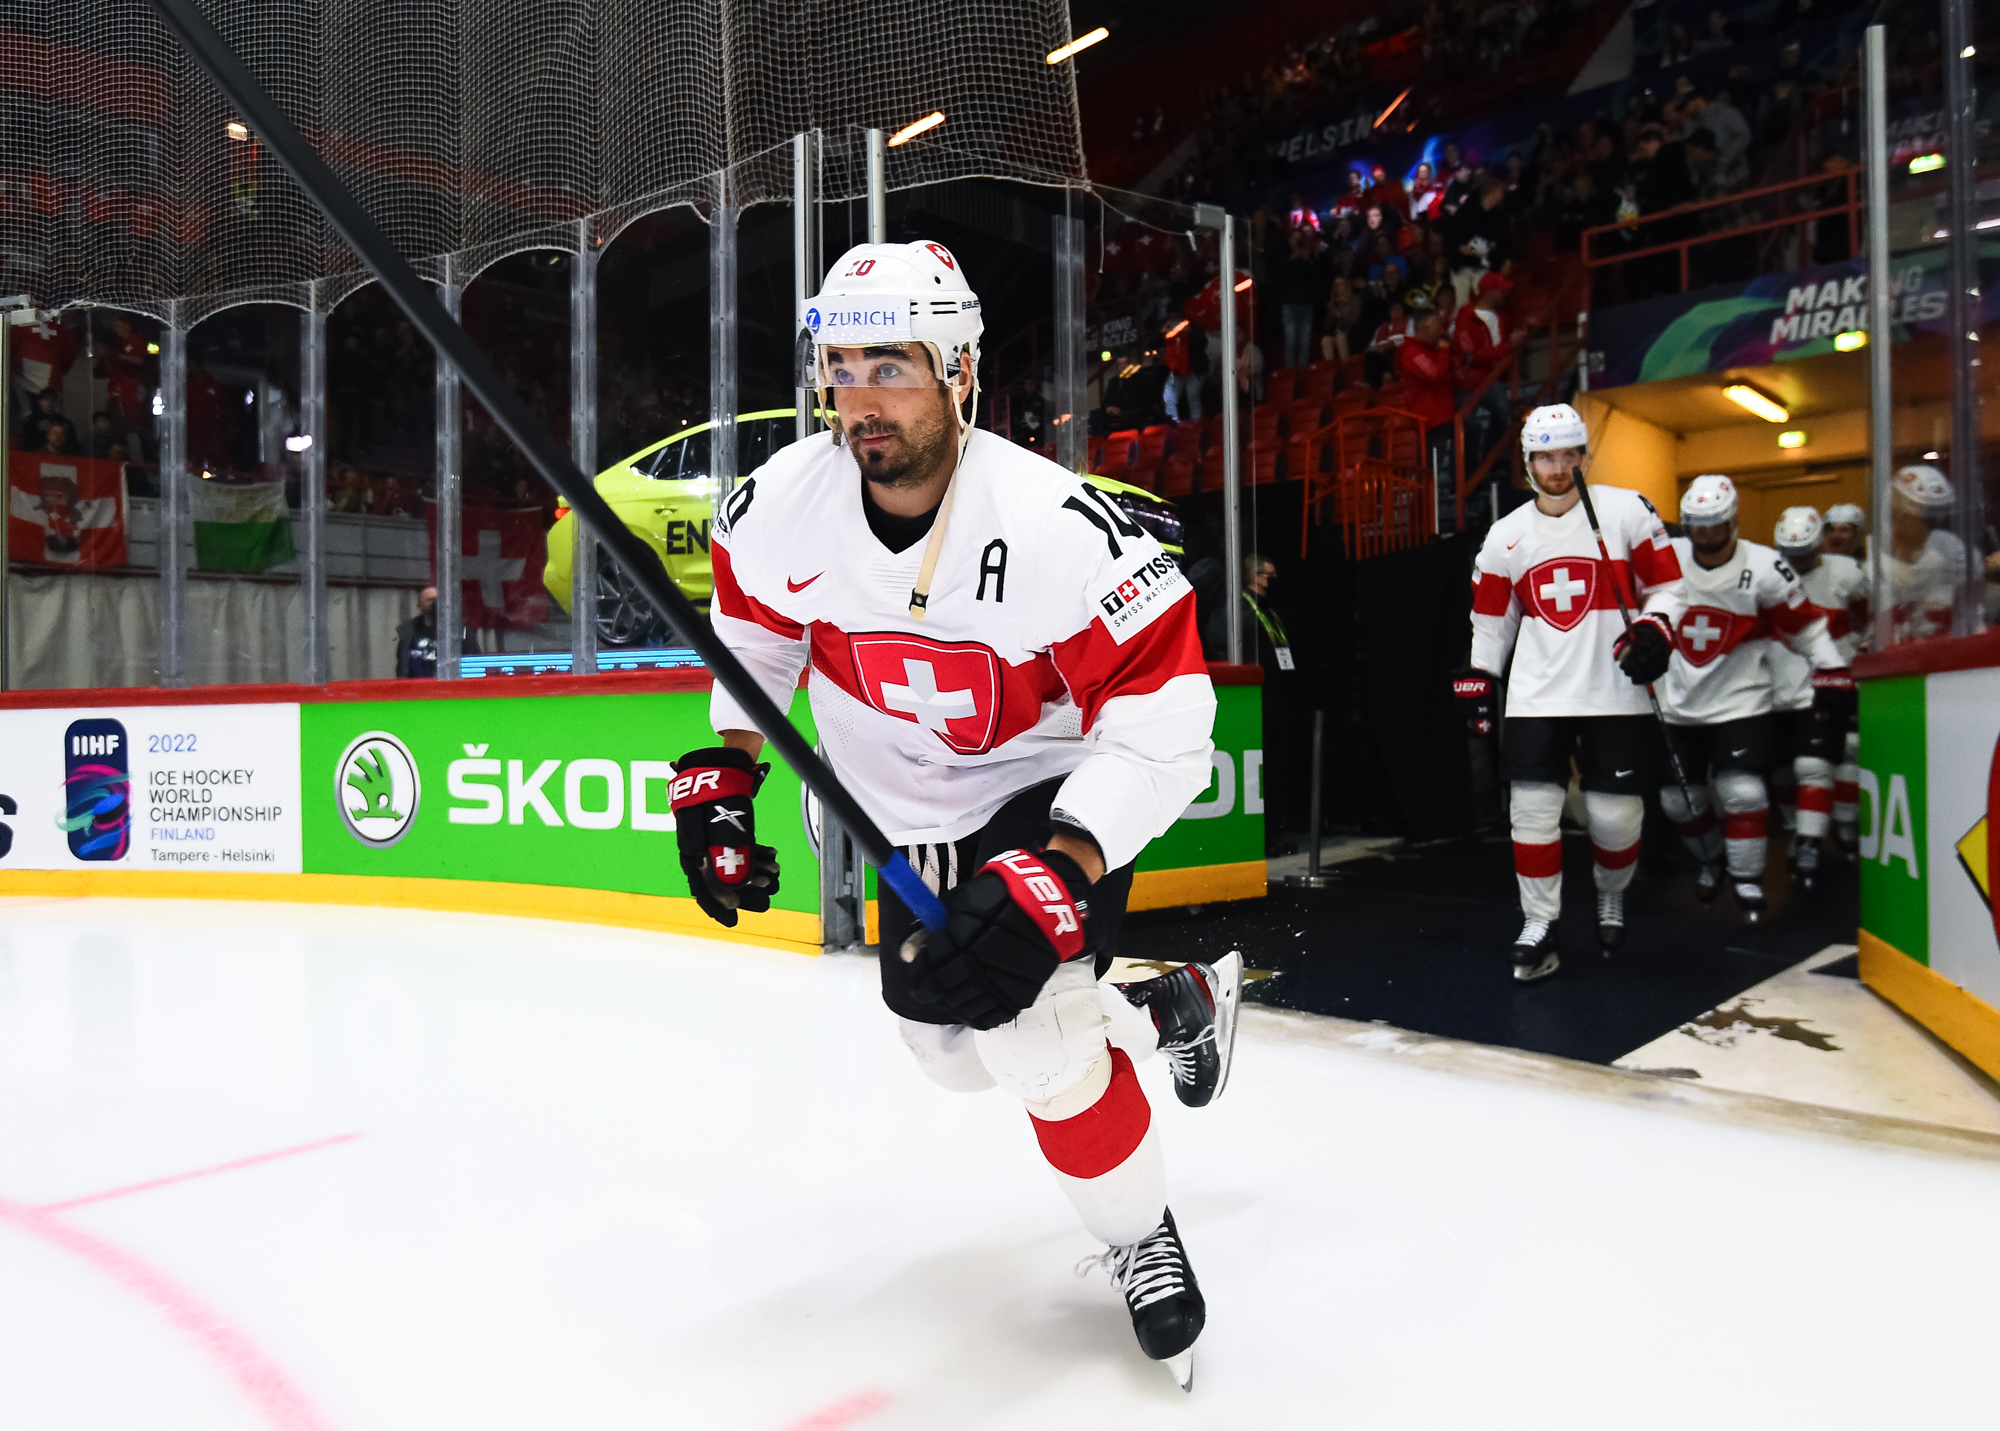 IIHF on X: Canada, Czech Republic, Switzerland, Korea play in